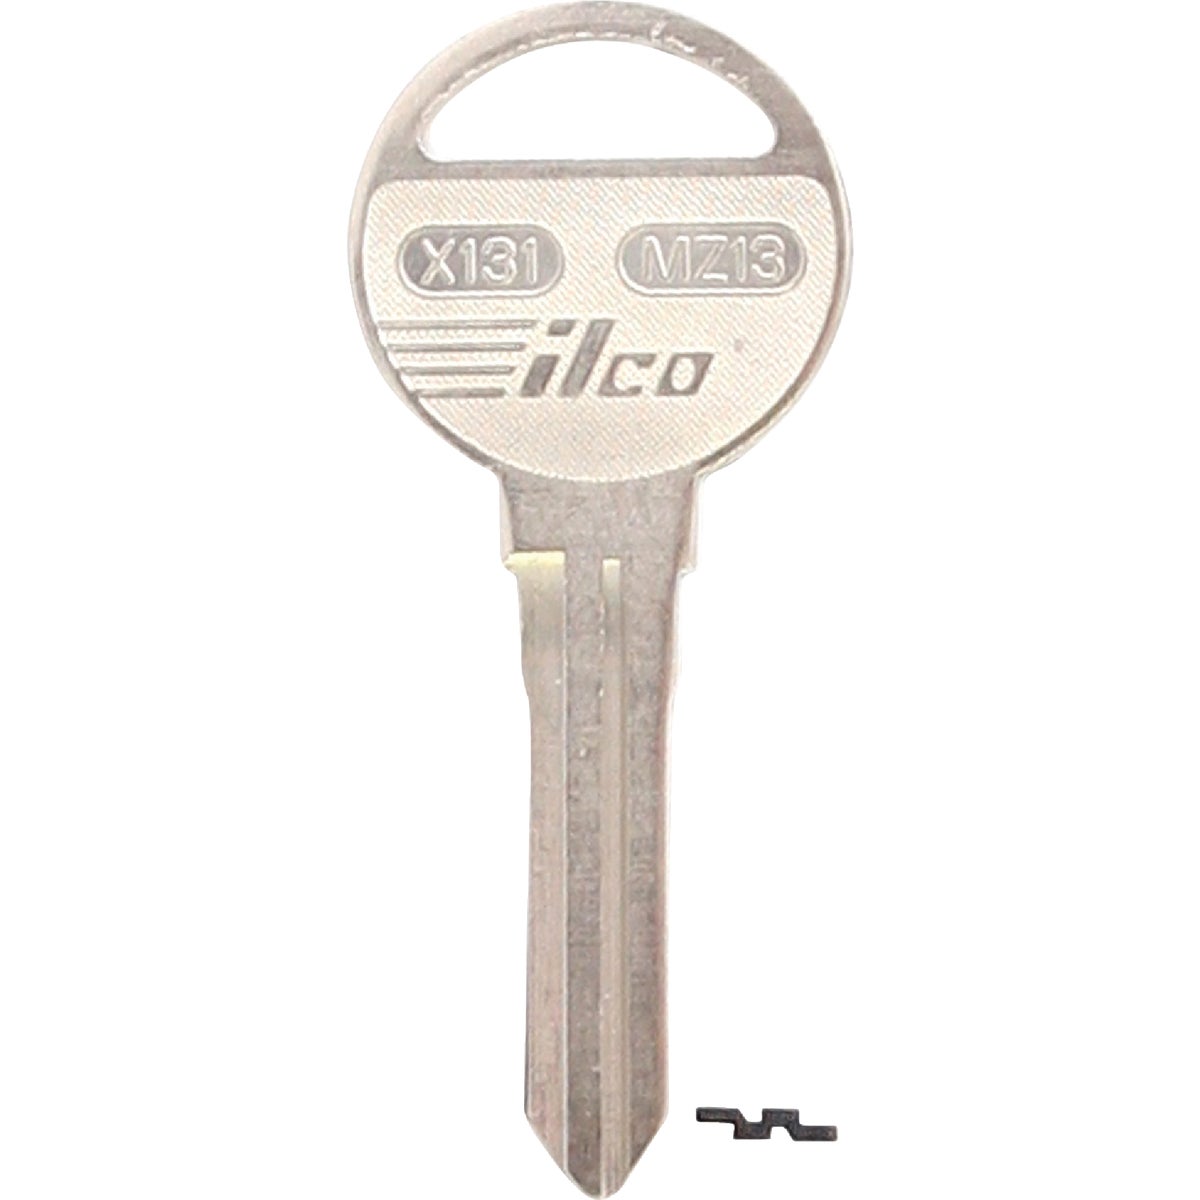 ILCO Mazda Nickel Plated Automotive Key, MZ13 / X131 (10-Pack)